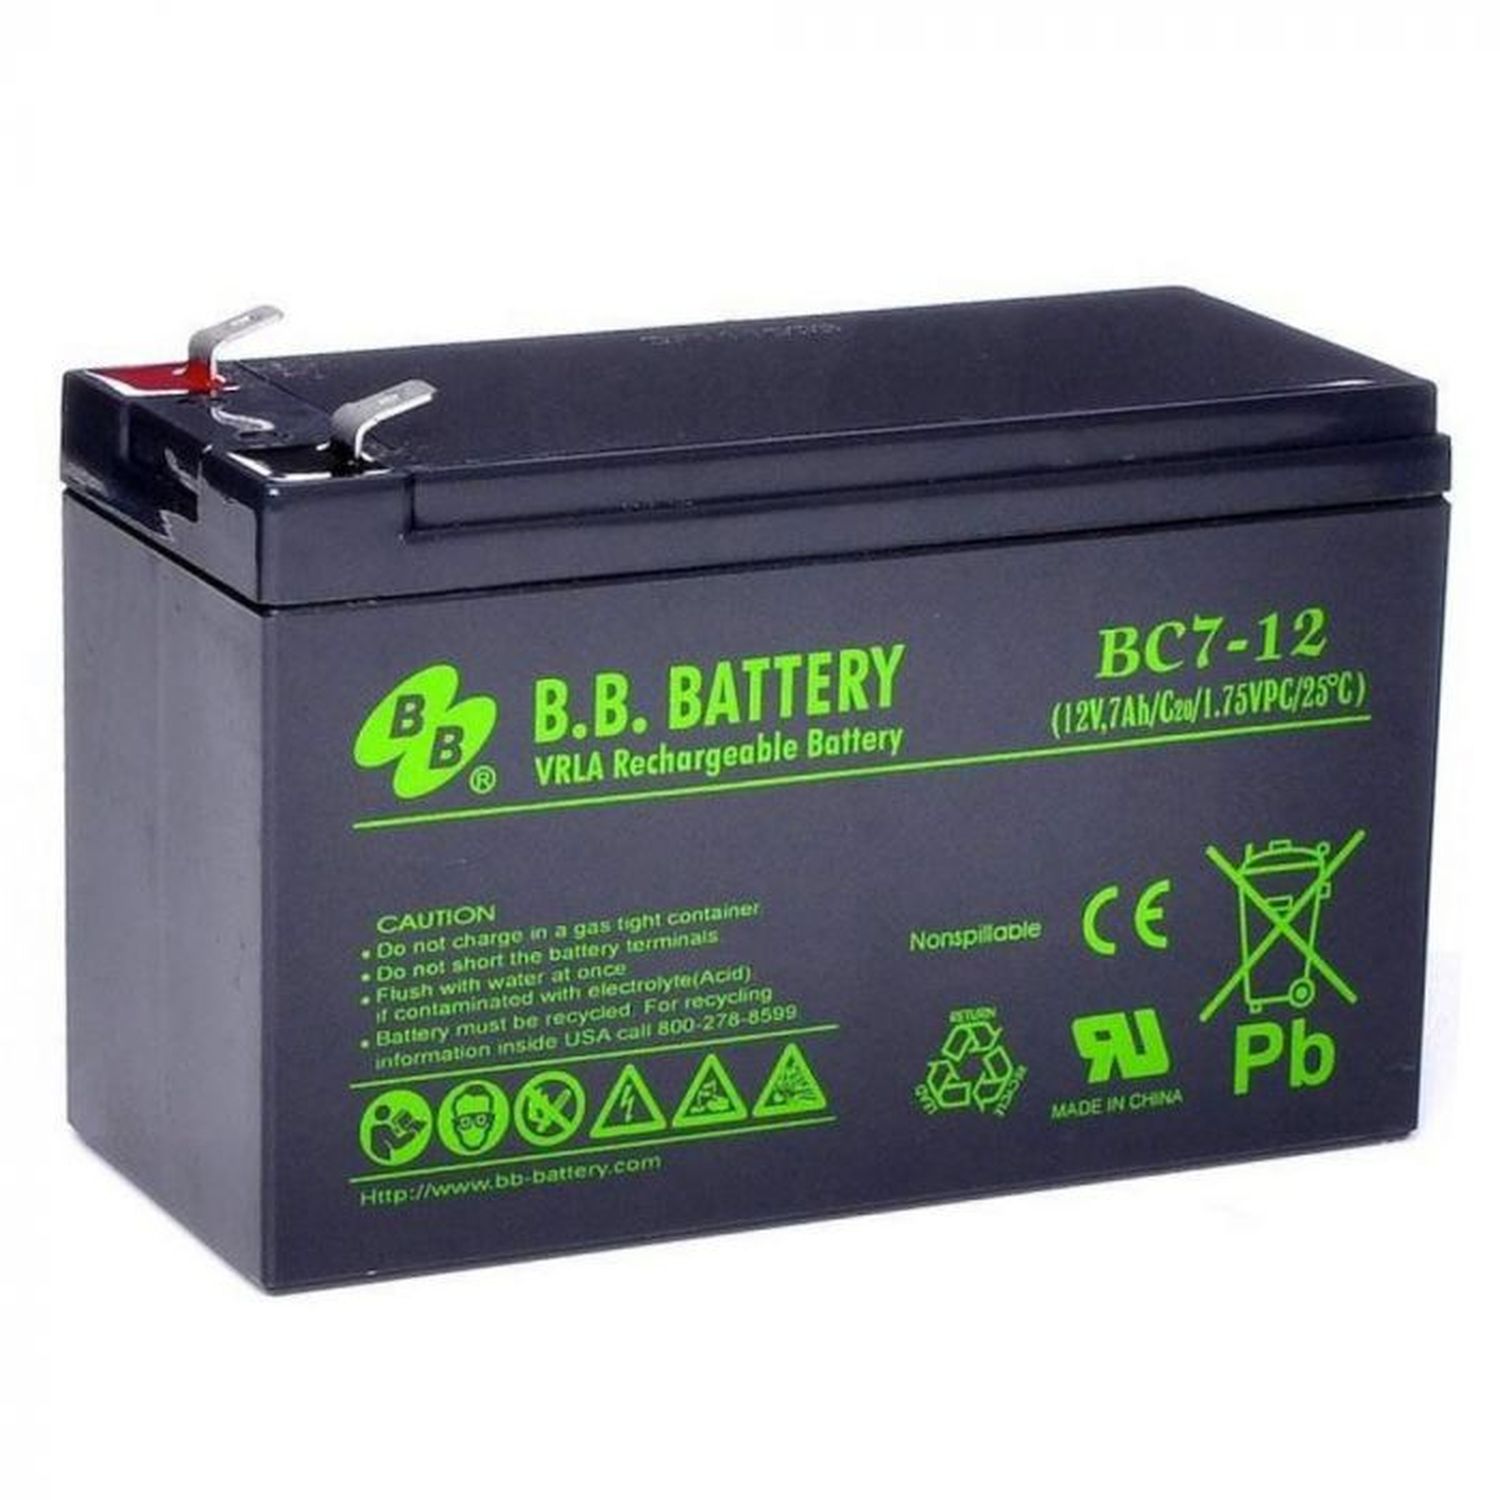 Bc 7 12. Аккумулятор BB Battery BC 7-12. Батарея для ИБП BB BC 12-12. Батарея для ИБП B. B. Battery BC 7-12. BB Battery 12v 7ah.